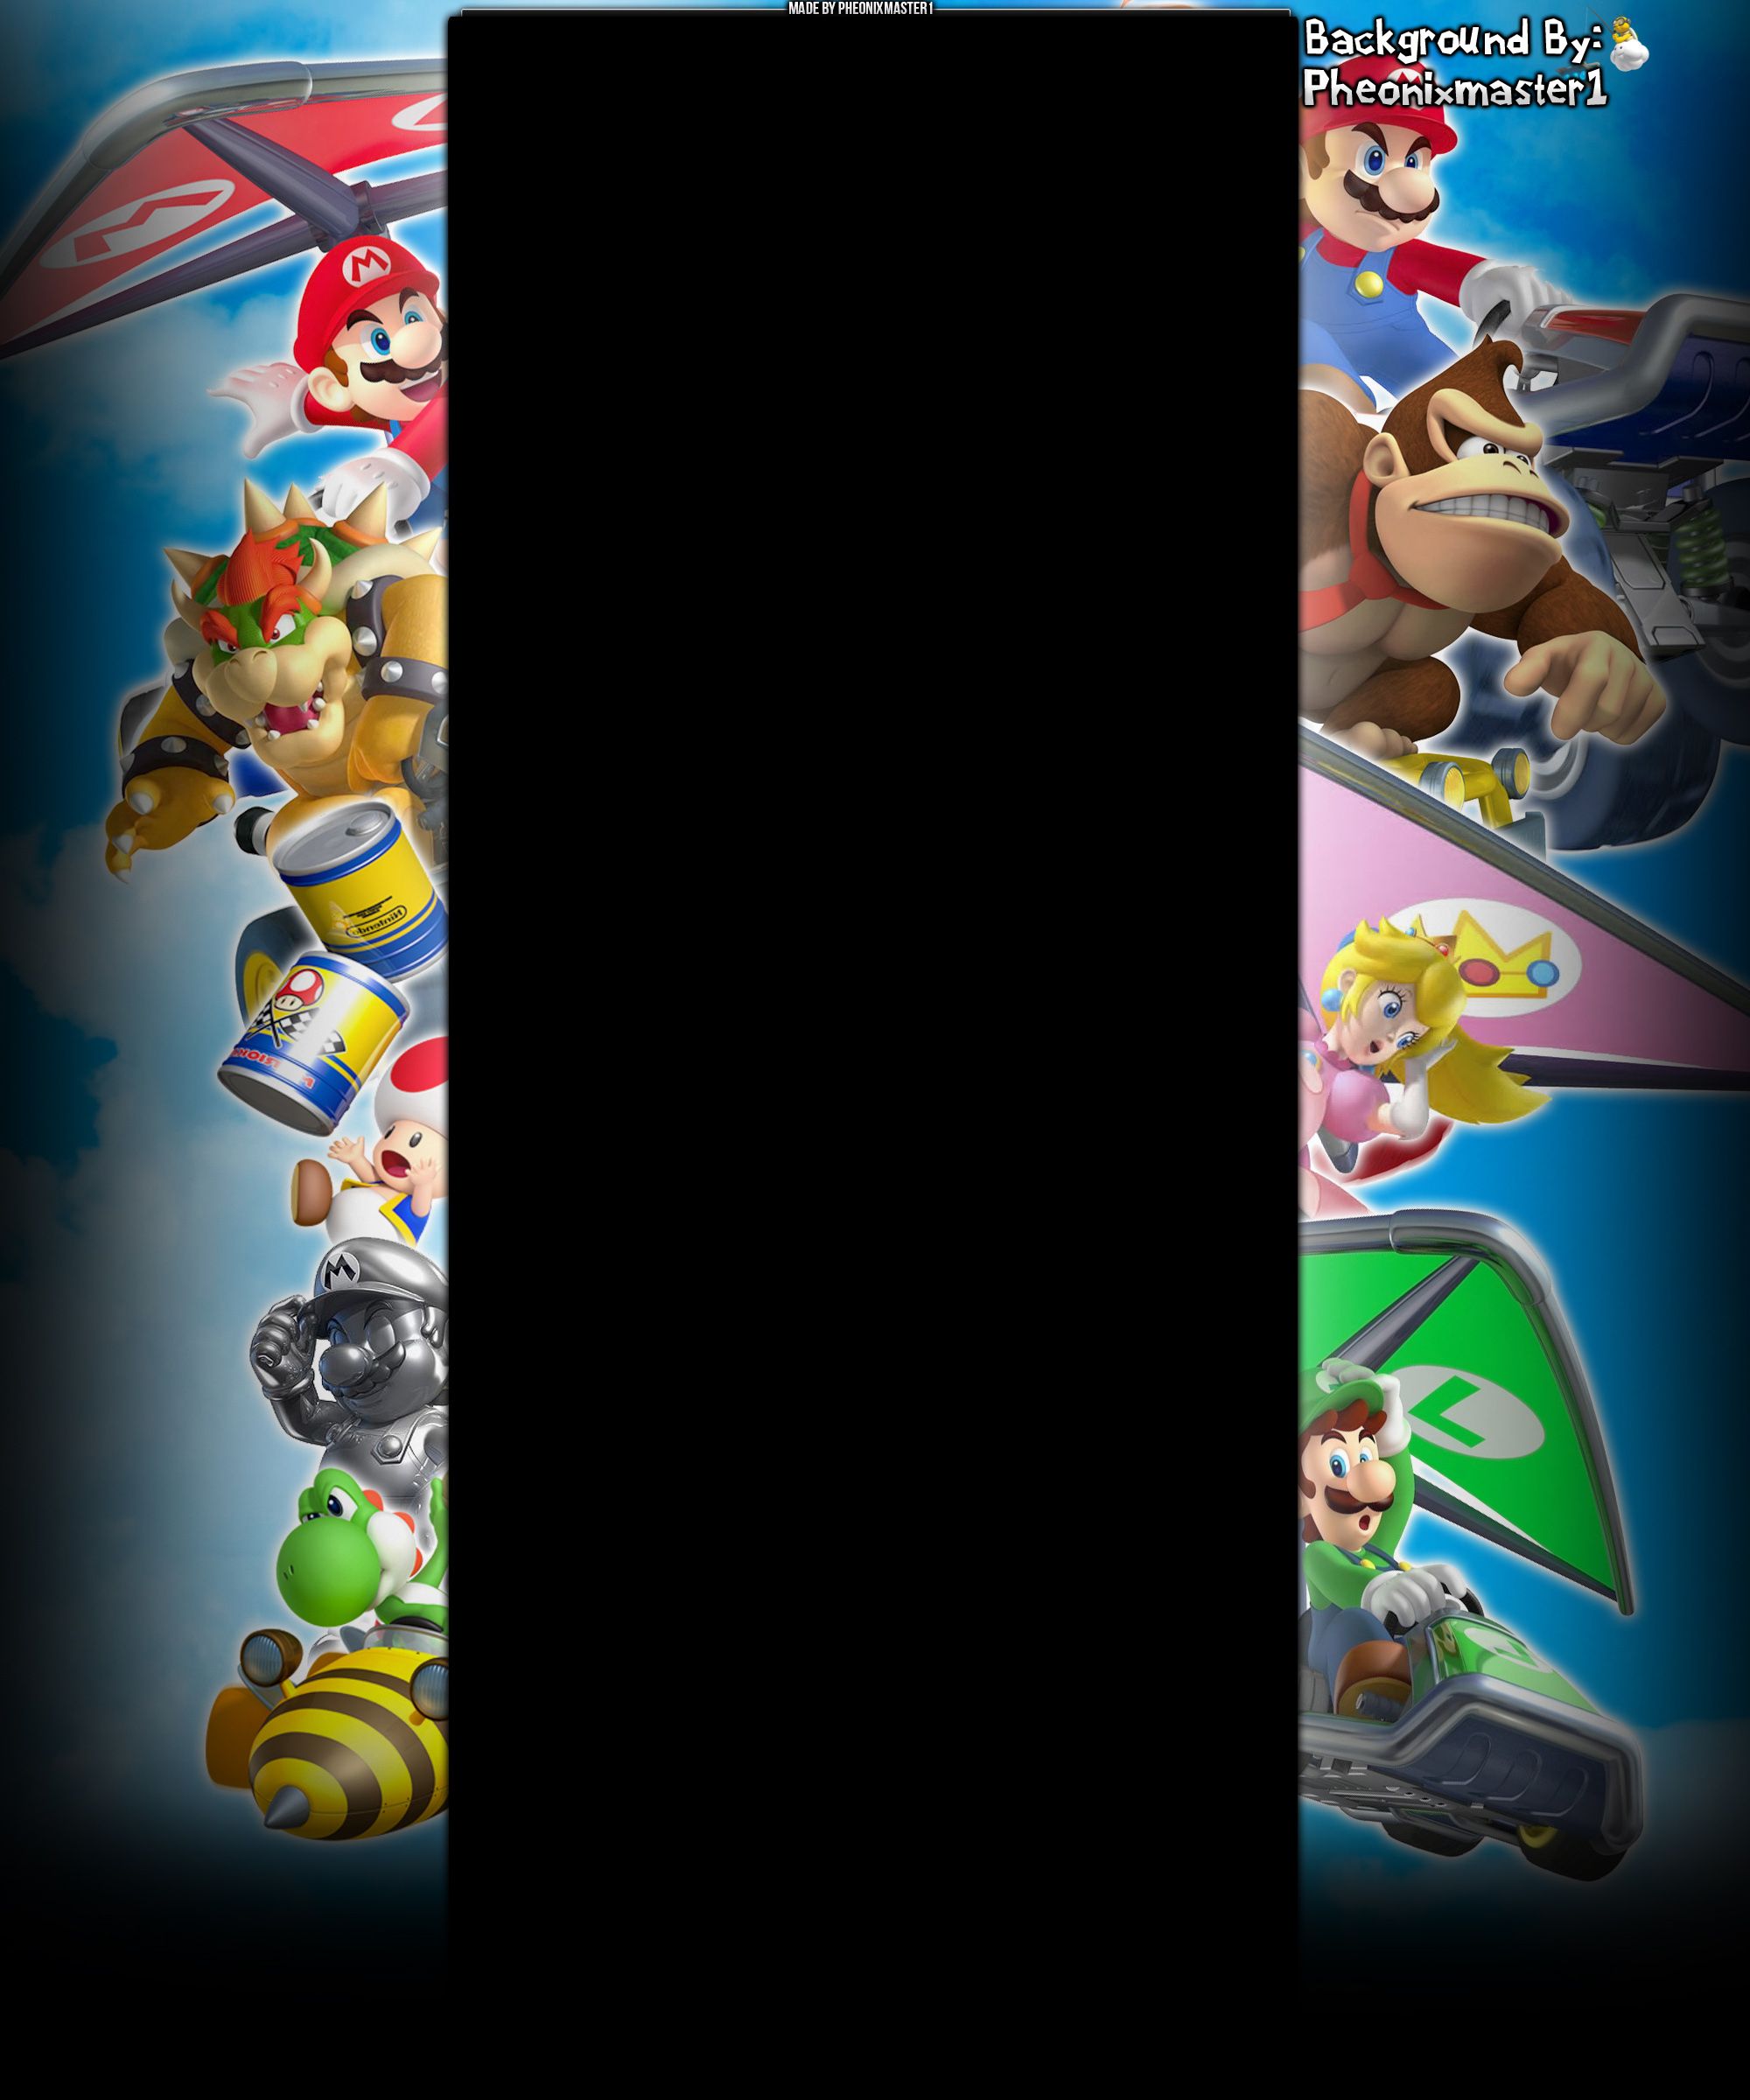 Mario Kart 7 Background by Pheonixmaster1 on DeviantArt